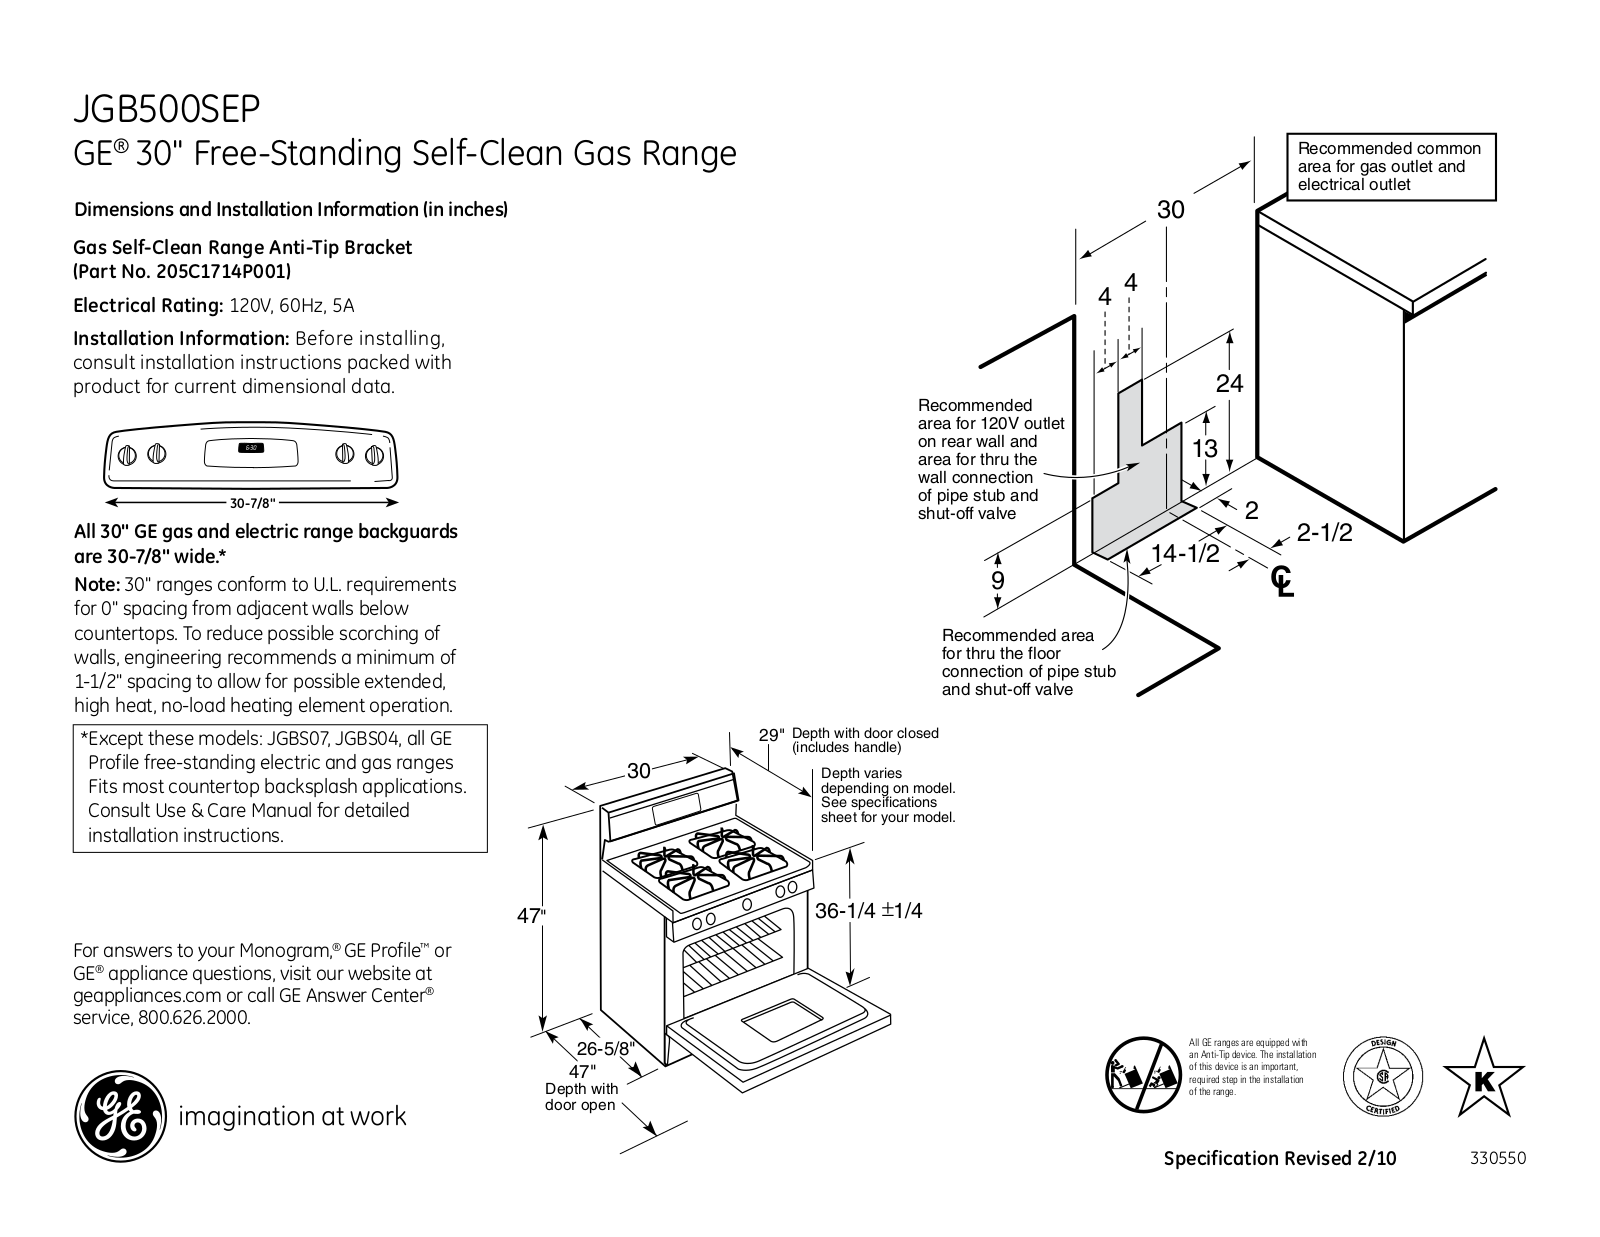 General Electric JGB500SEPSS User Manual